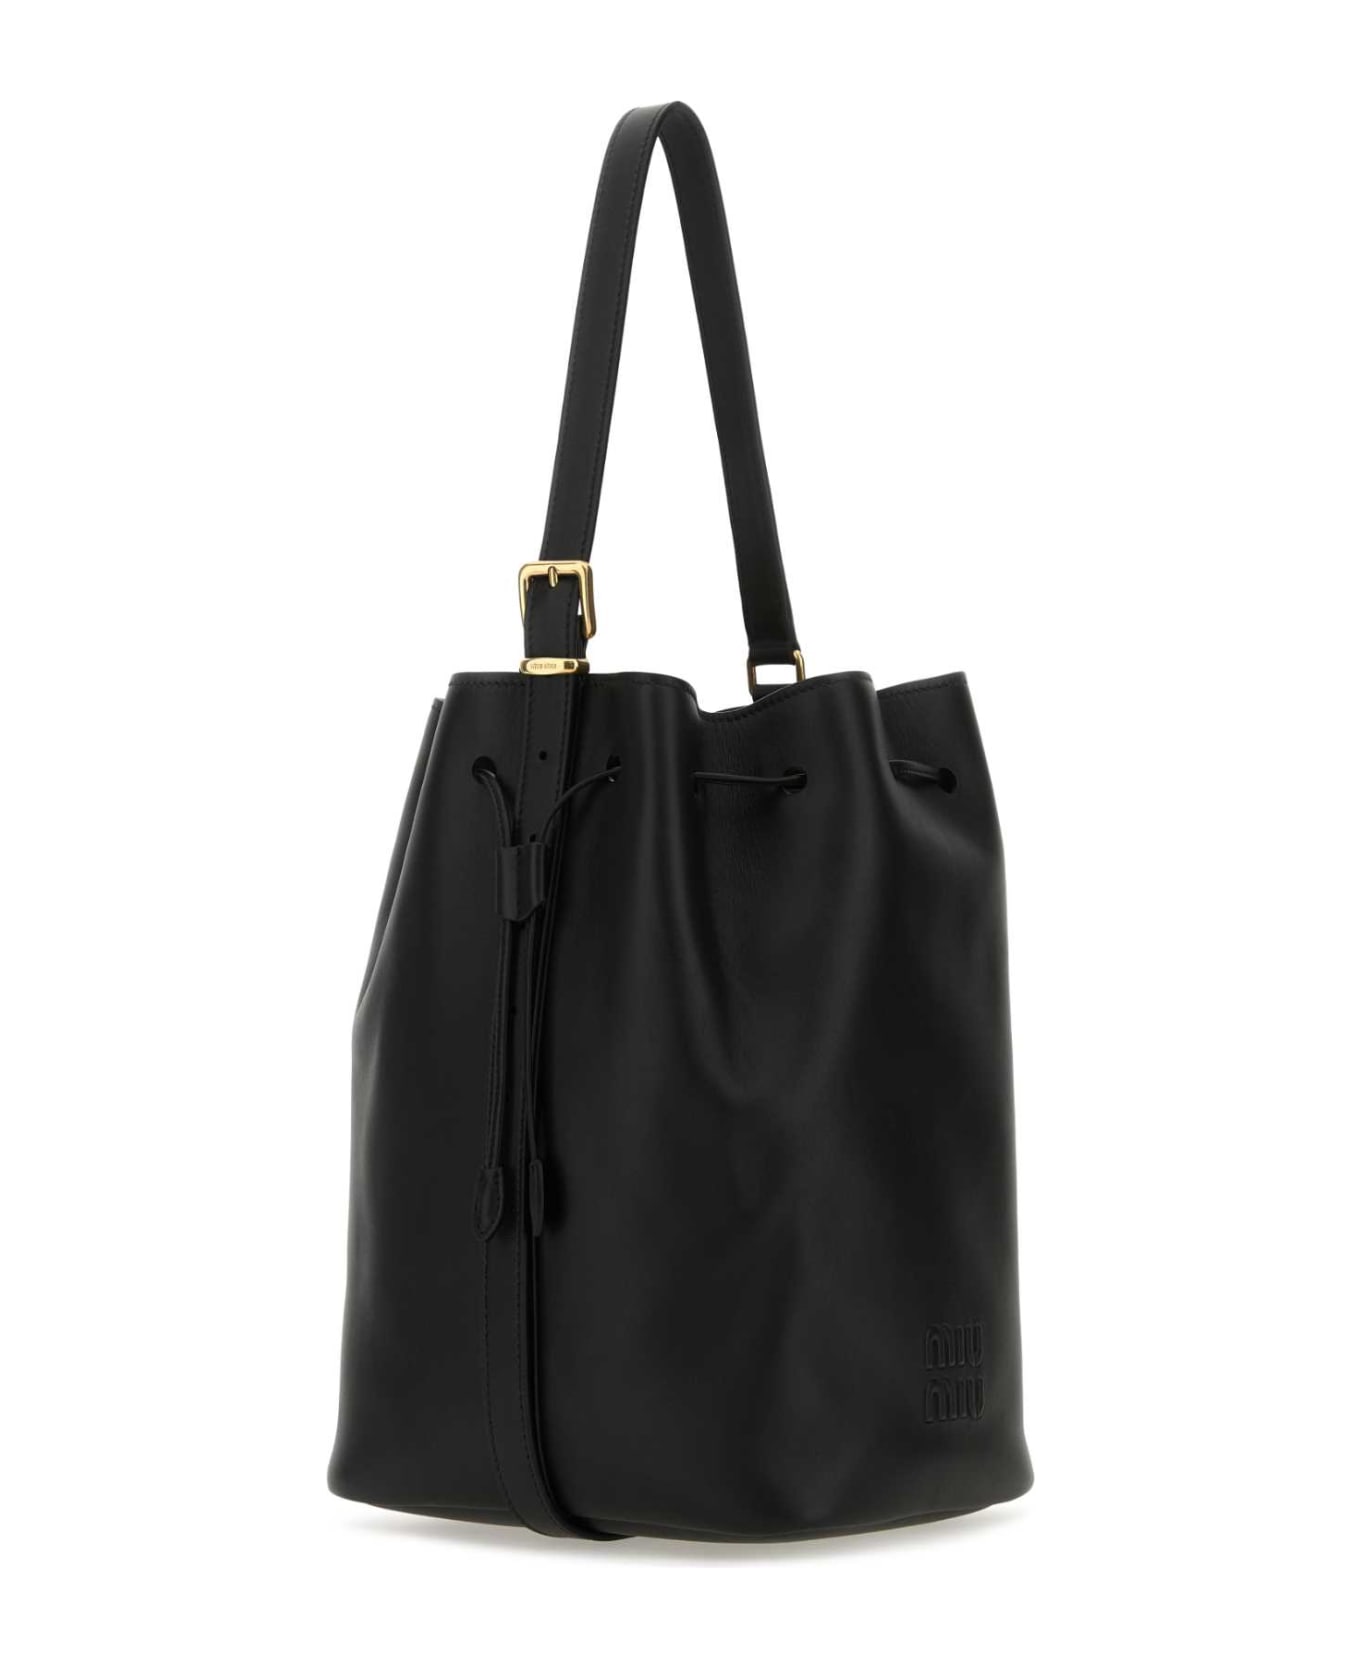 Miu Miu Black Leather Bucket Bag - NERO